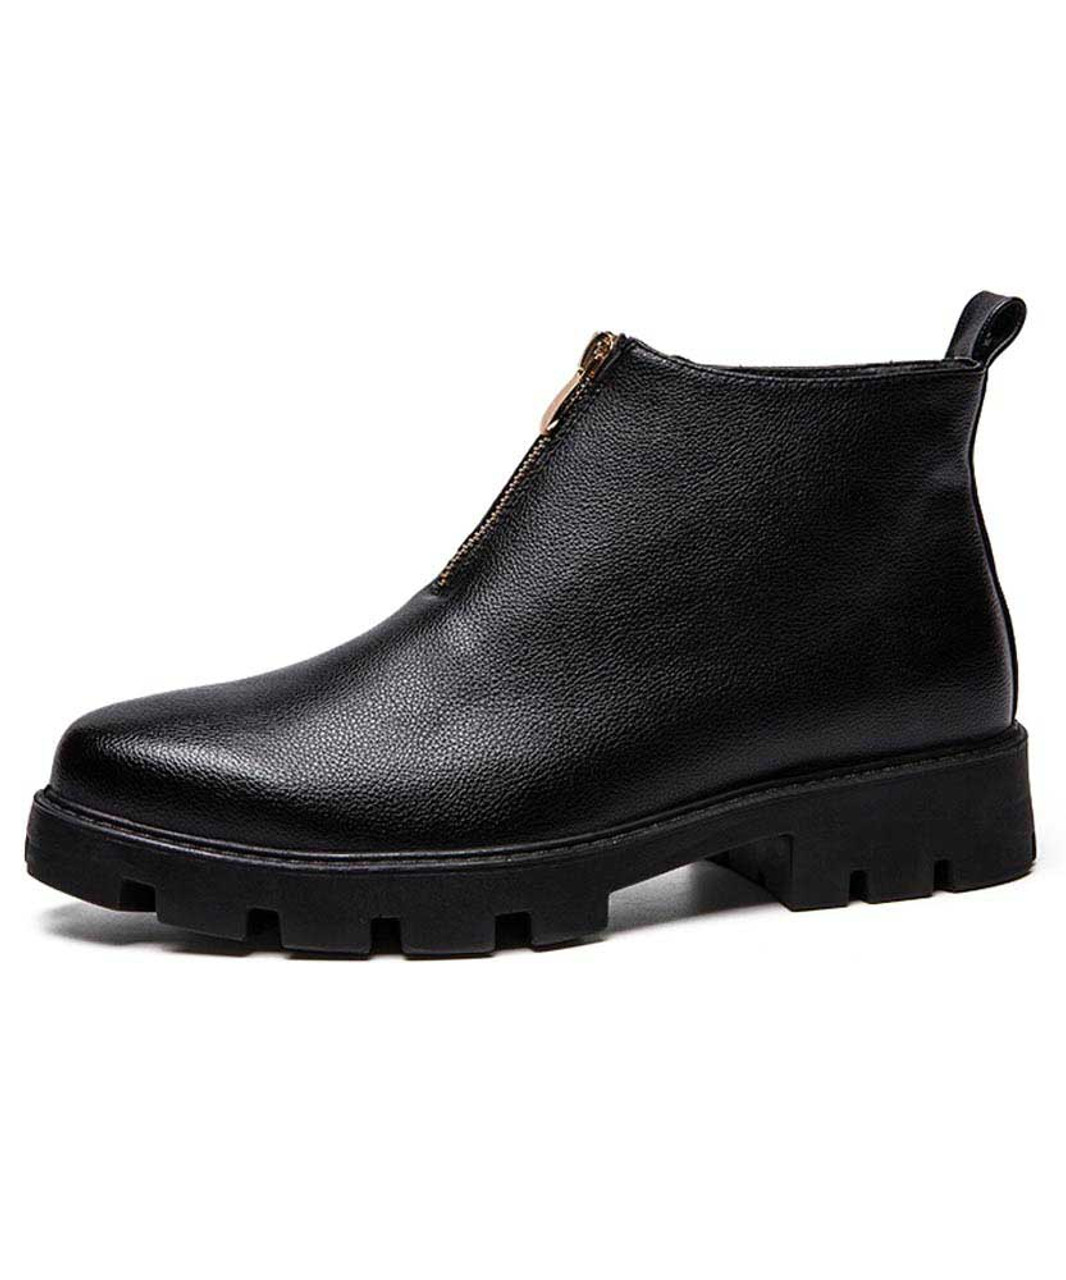 Black plain slip on dress shoe boot with zip on vamp | Mens shoe boots ...